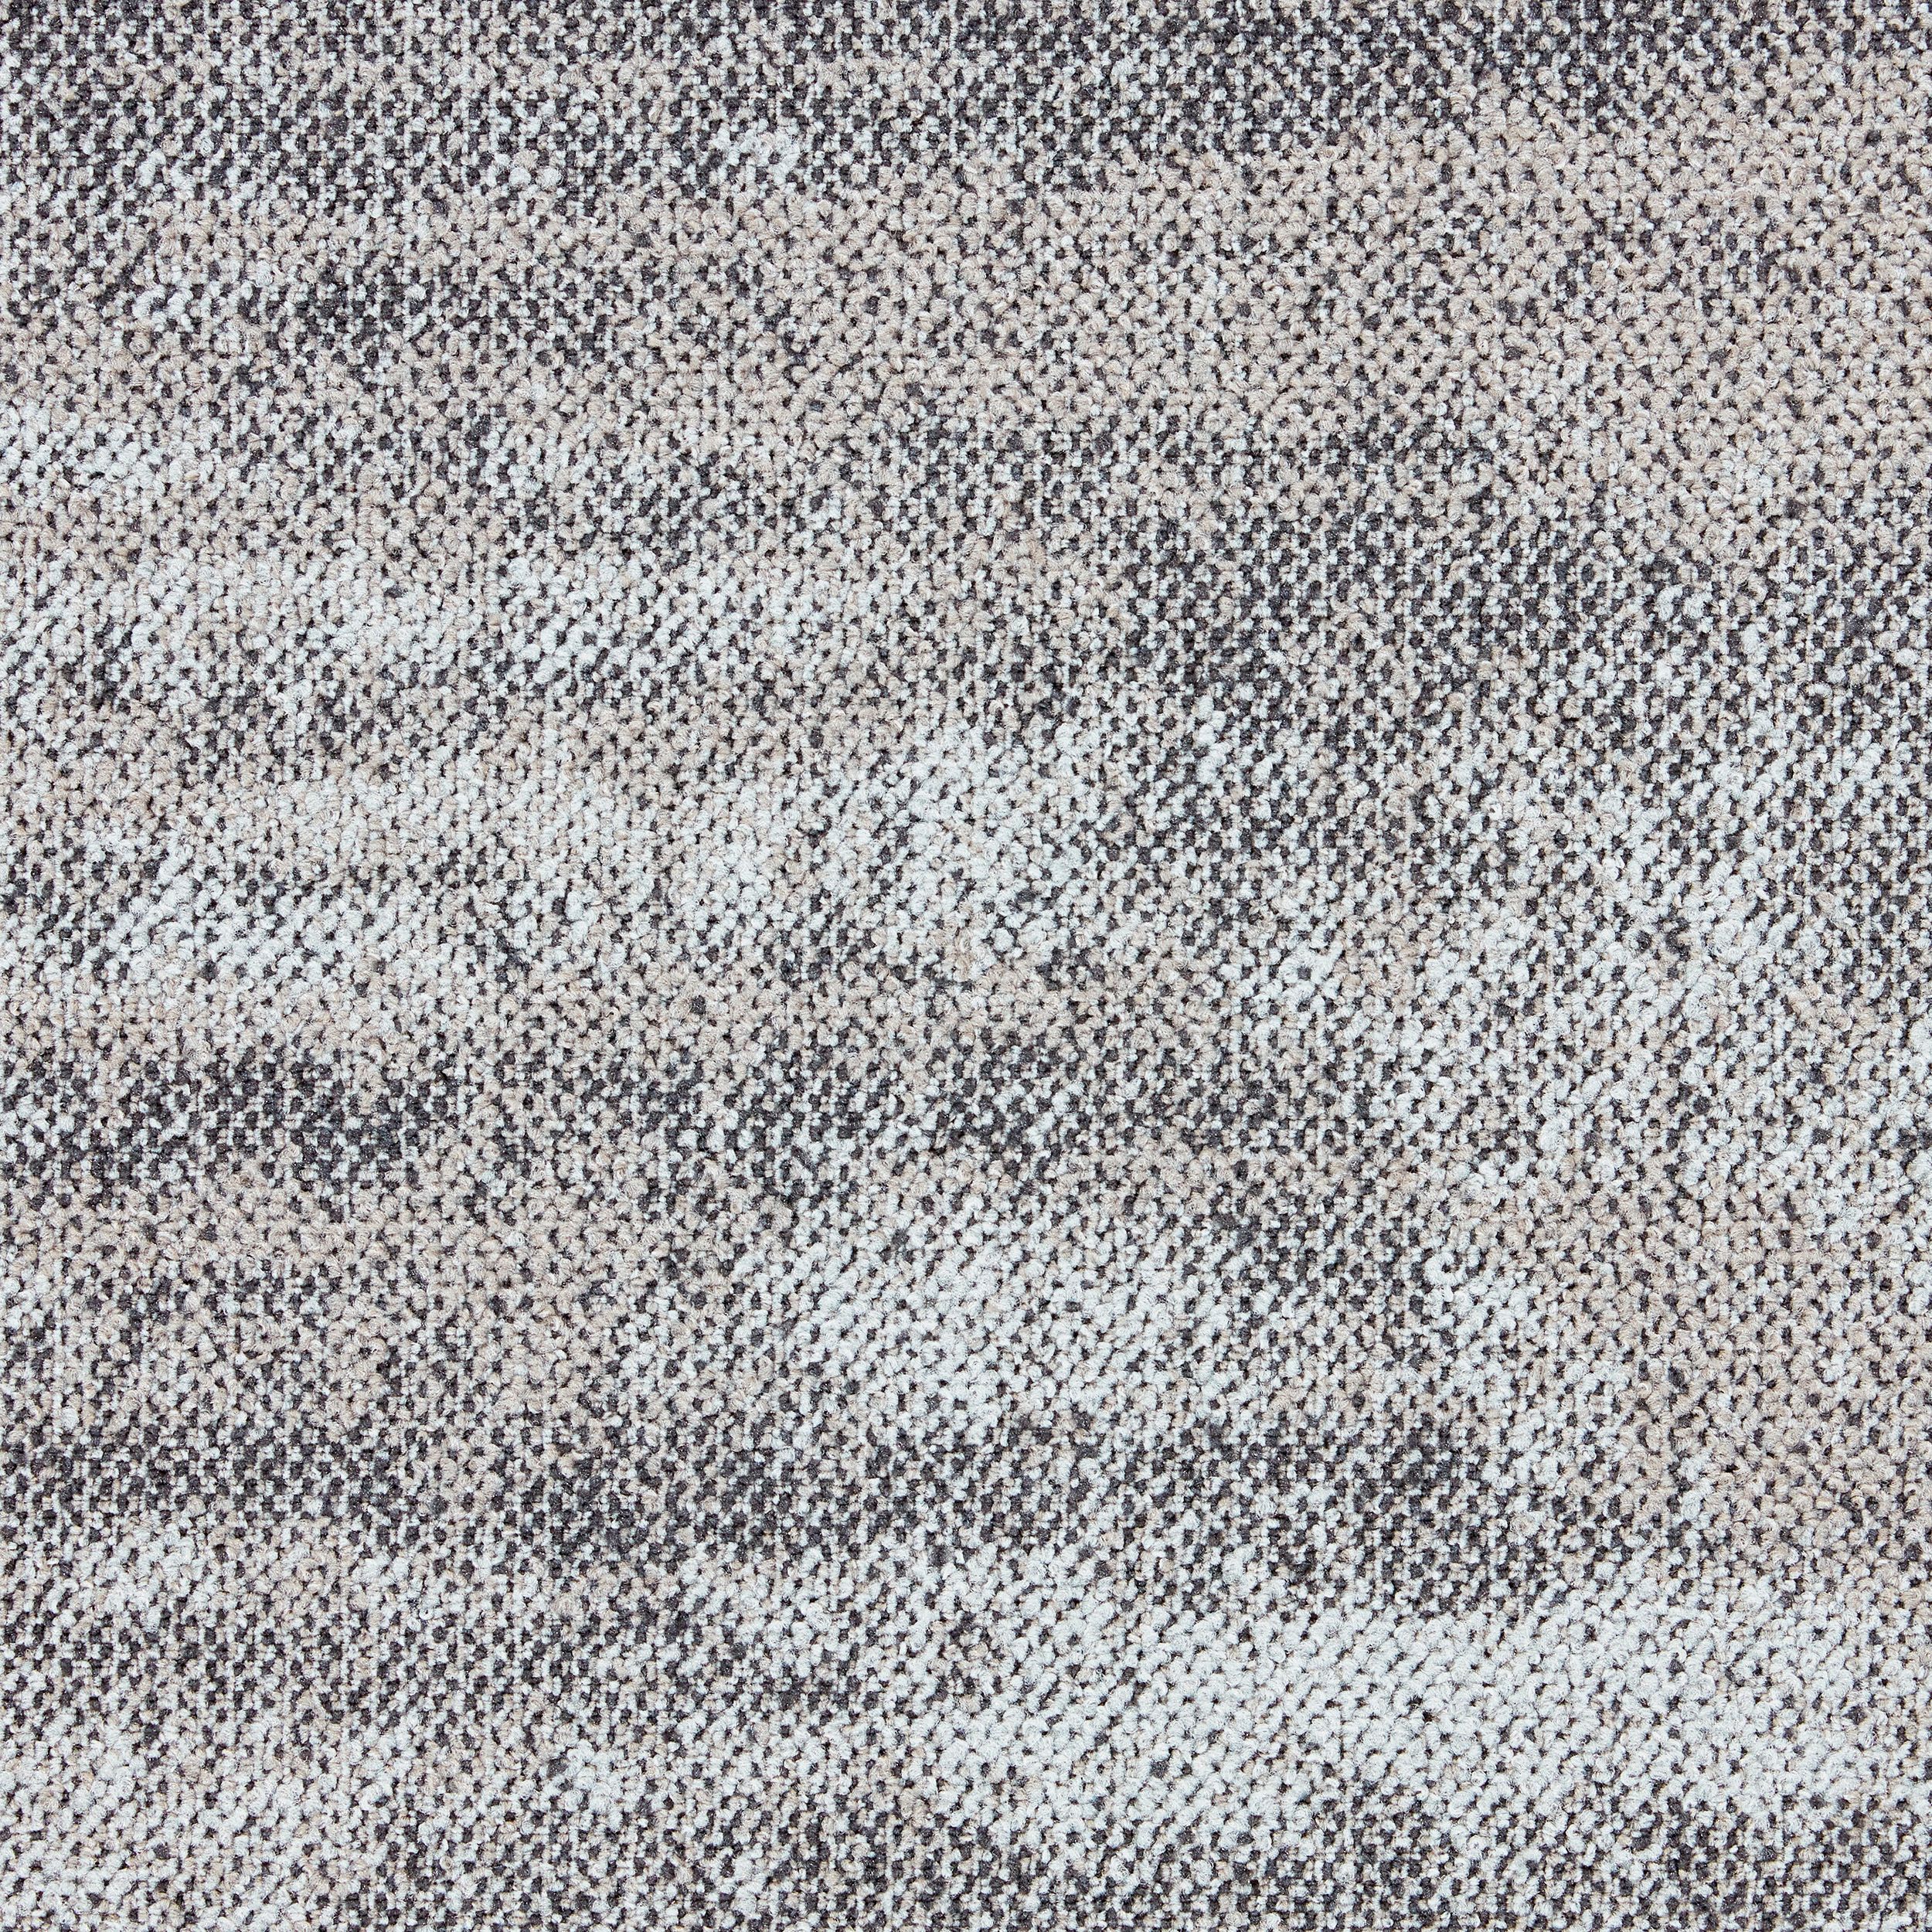 Works Sense Carpet Tile In Shell número de imagen 2